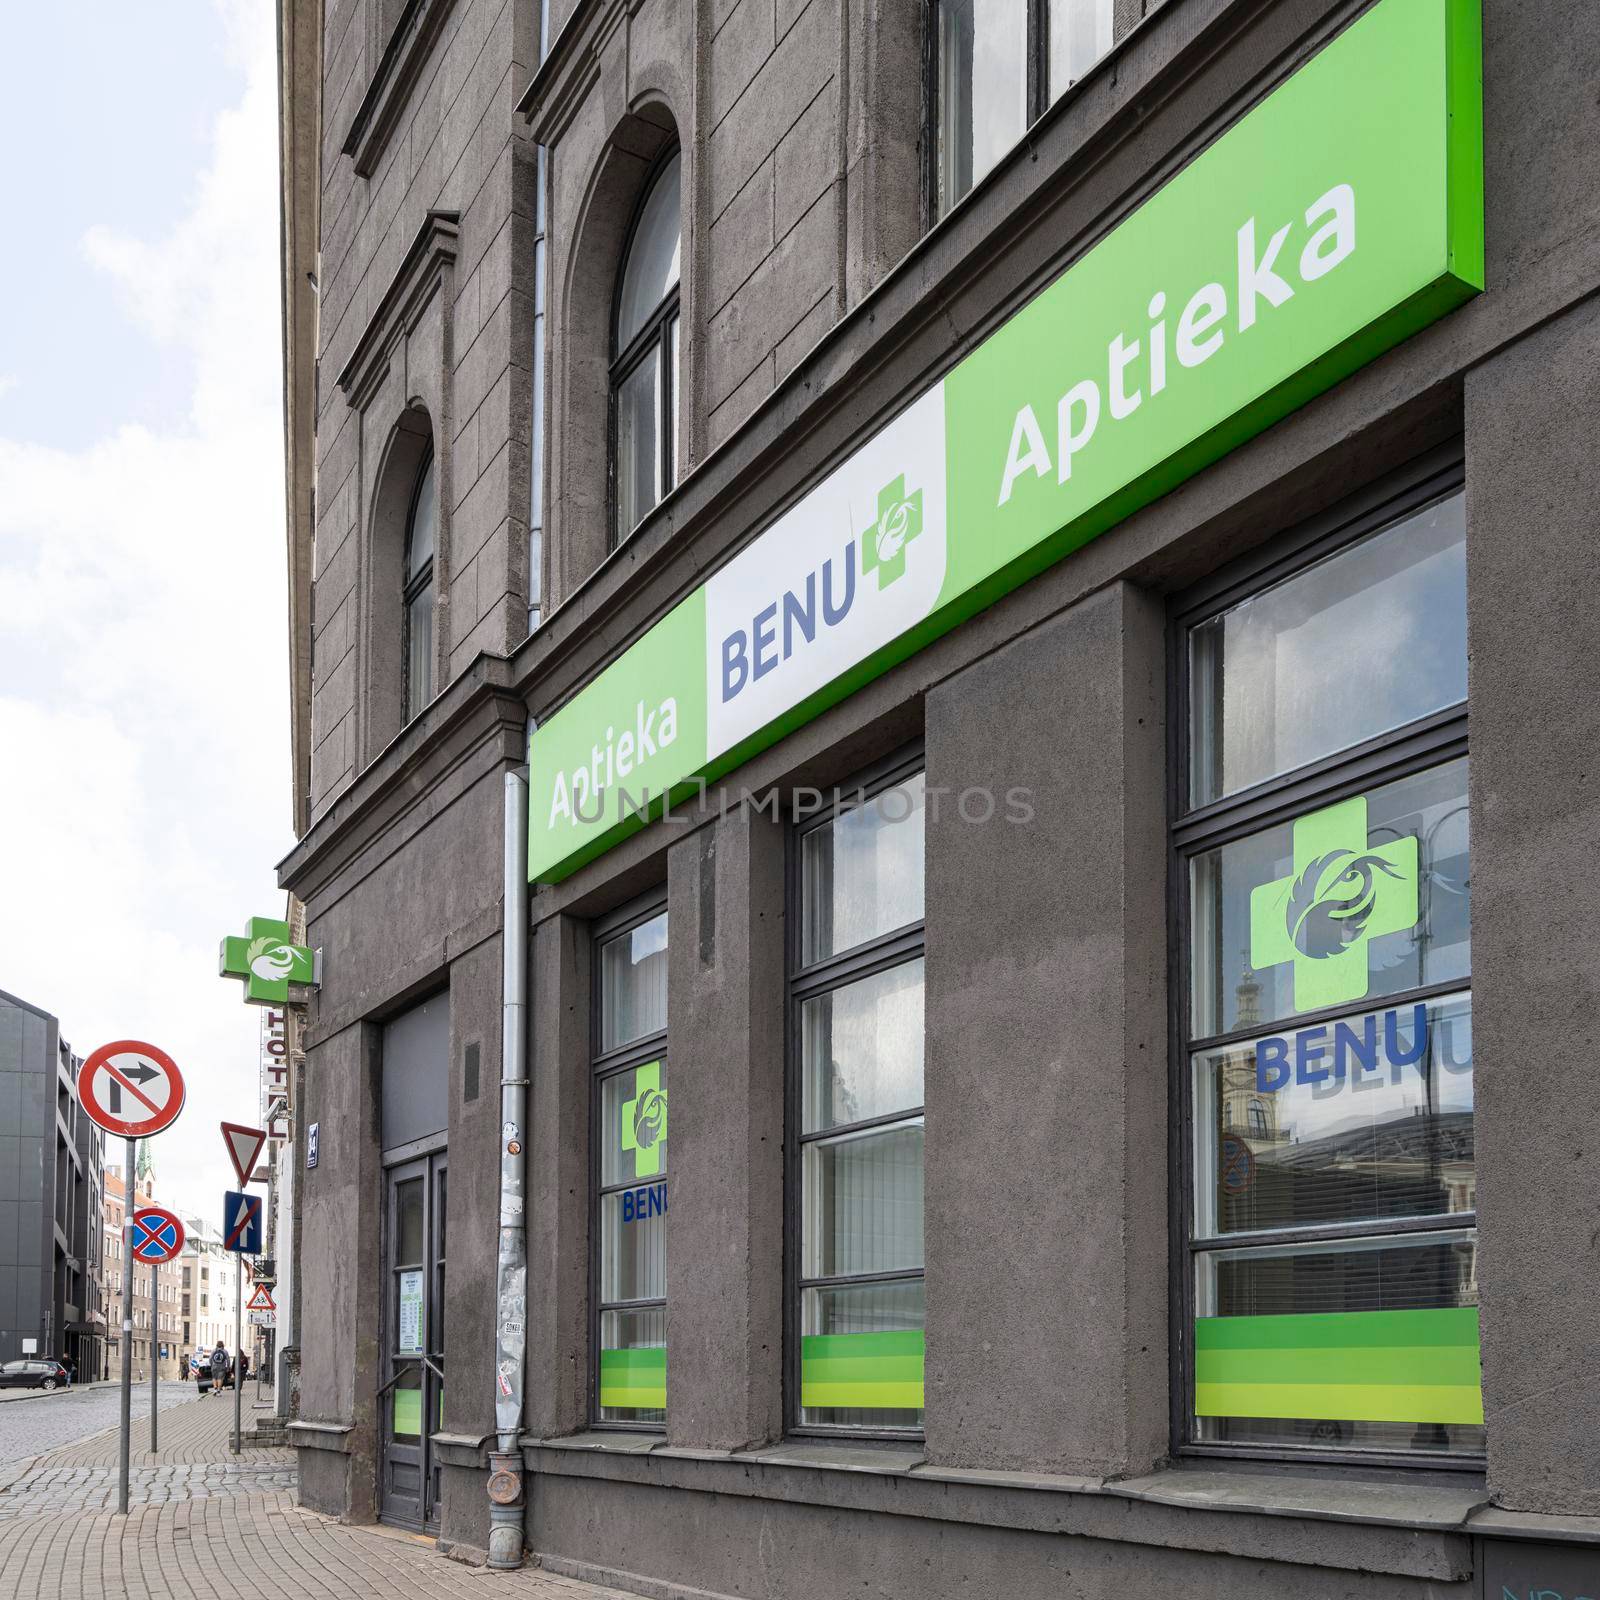 A pharmacy in Riga, Latvia by sergiodv